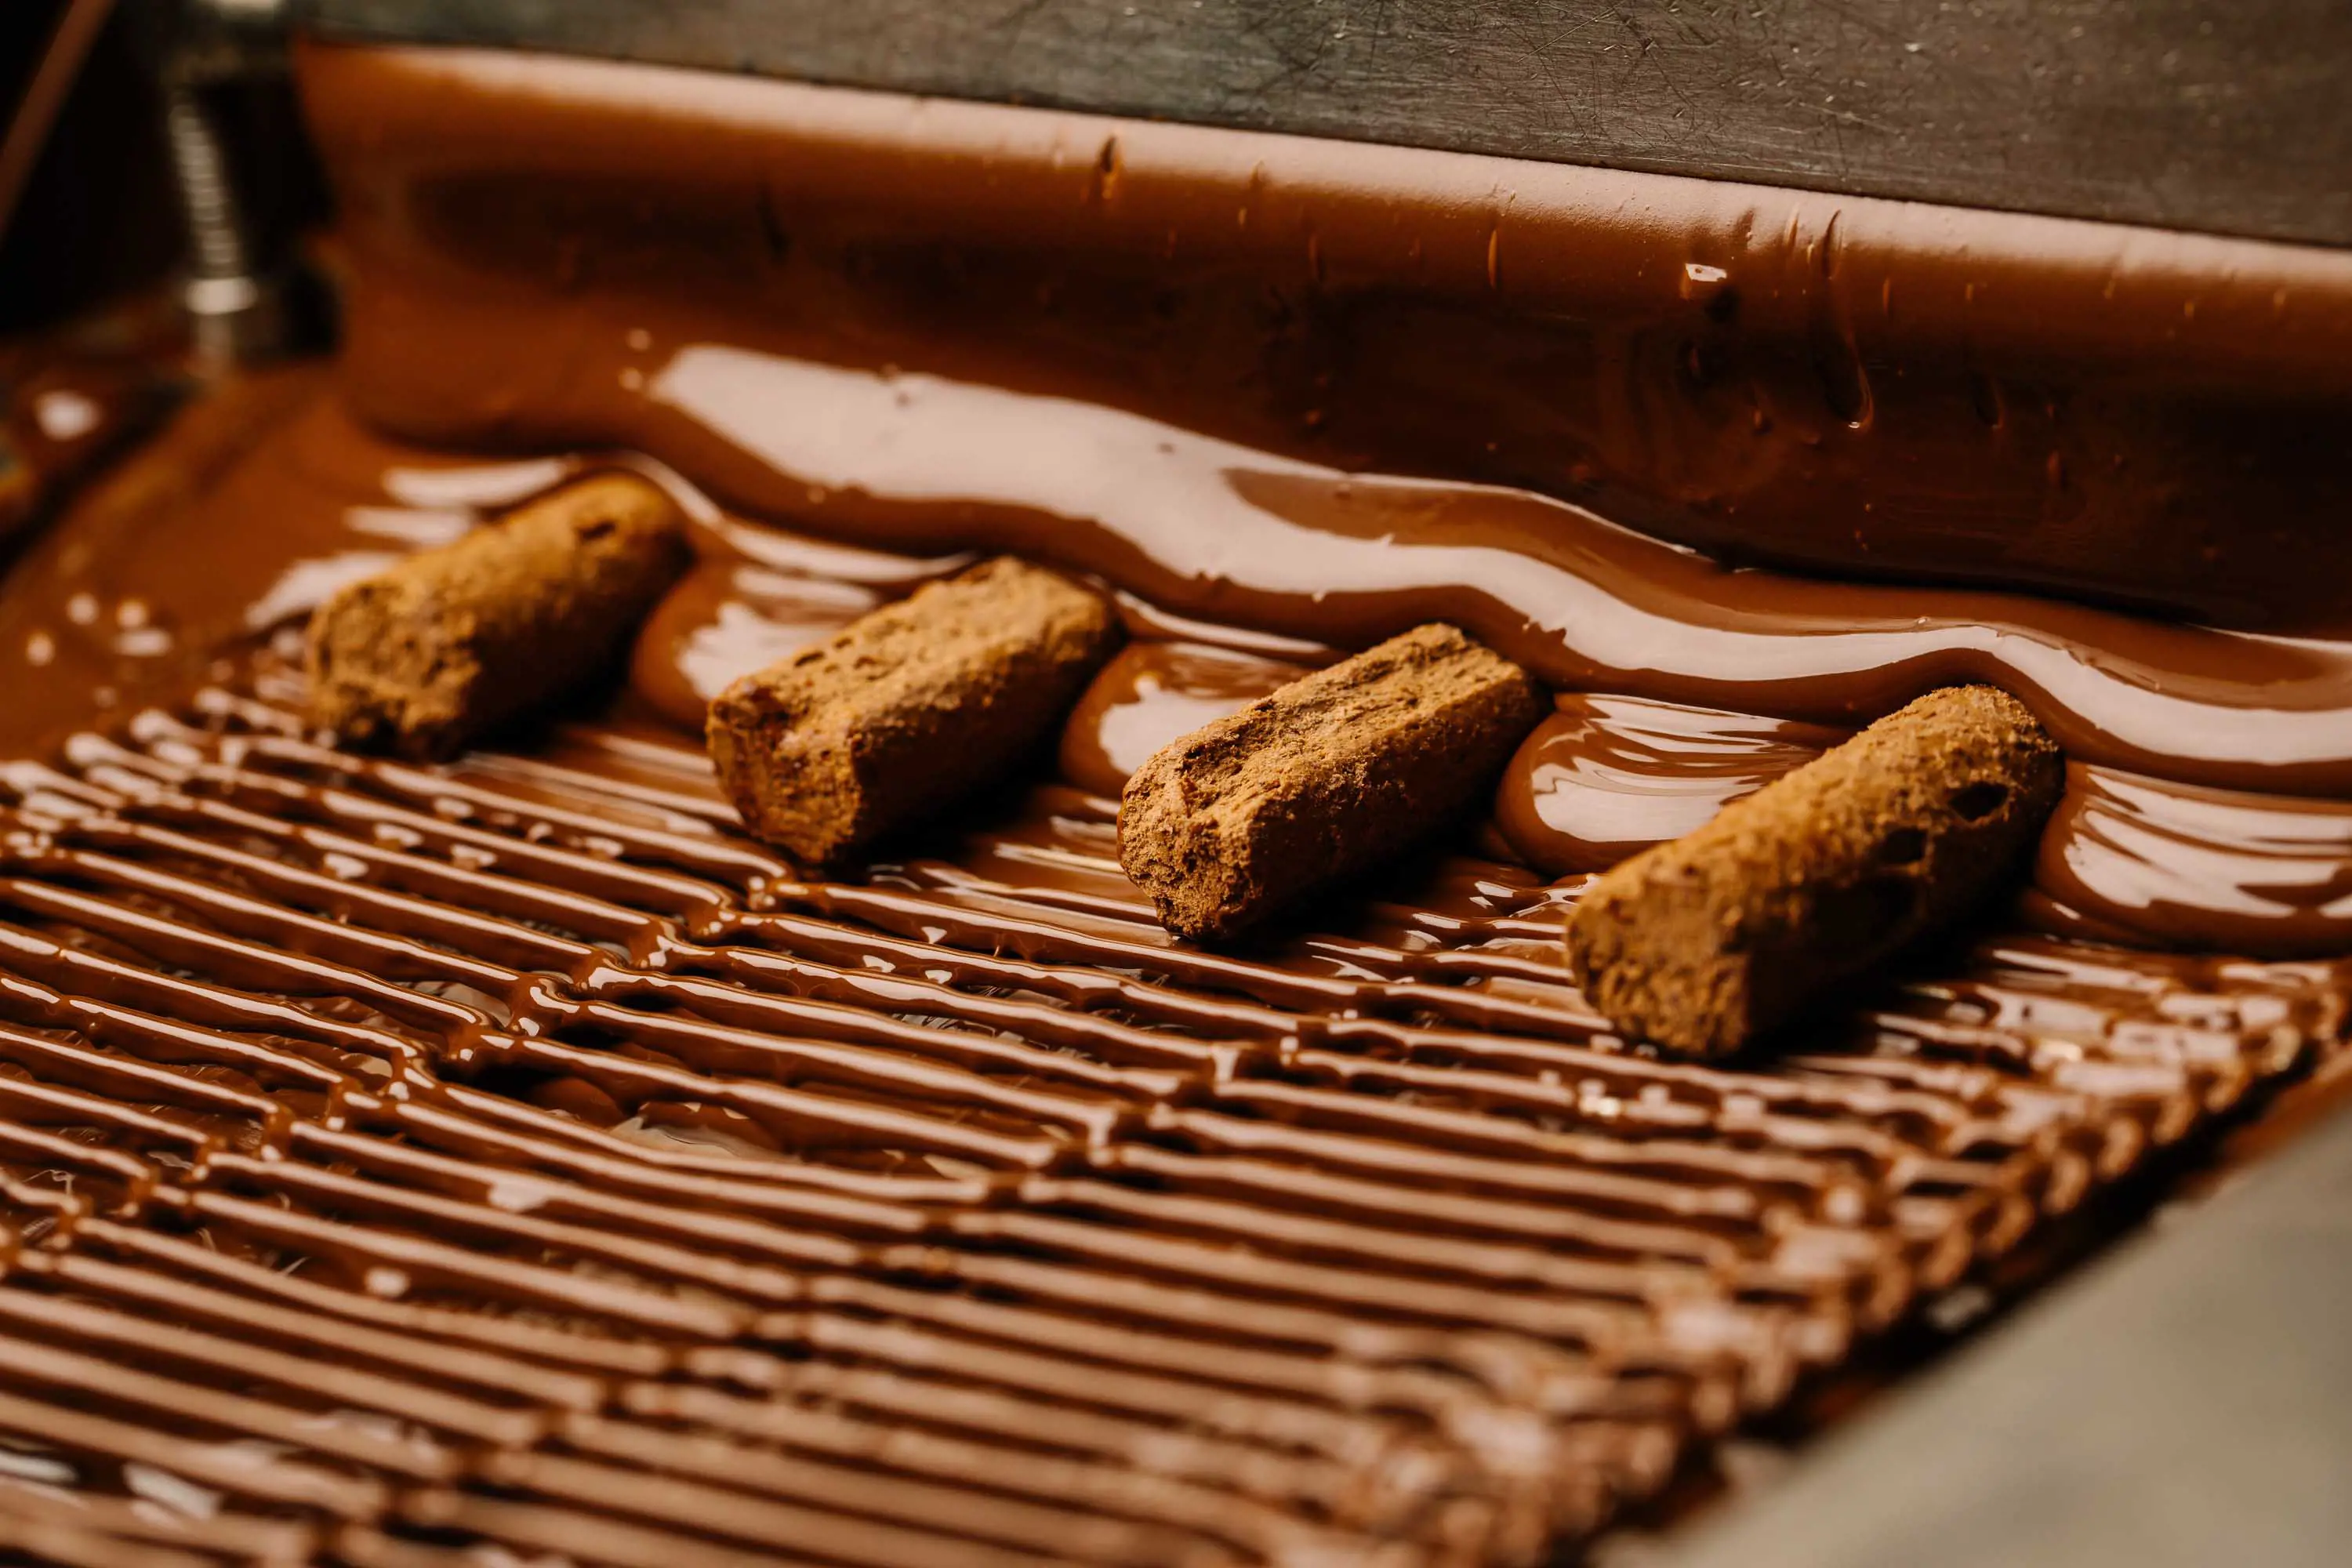 Truffles sitting on a small conveyor belt move through liquid chocolate.